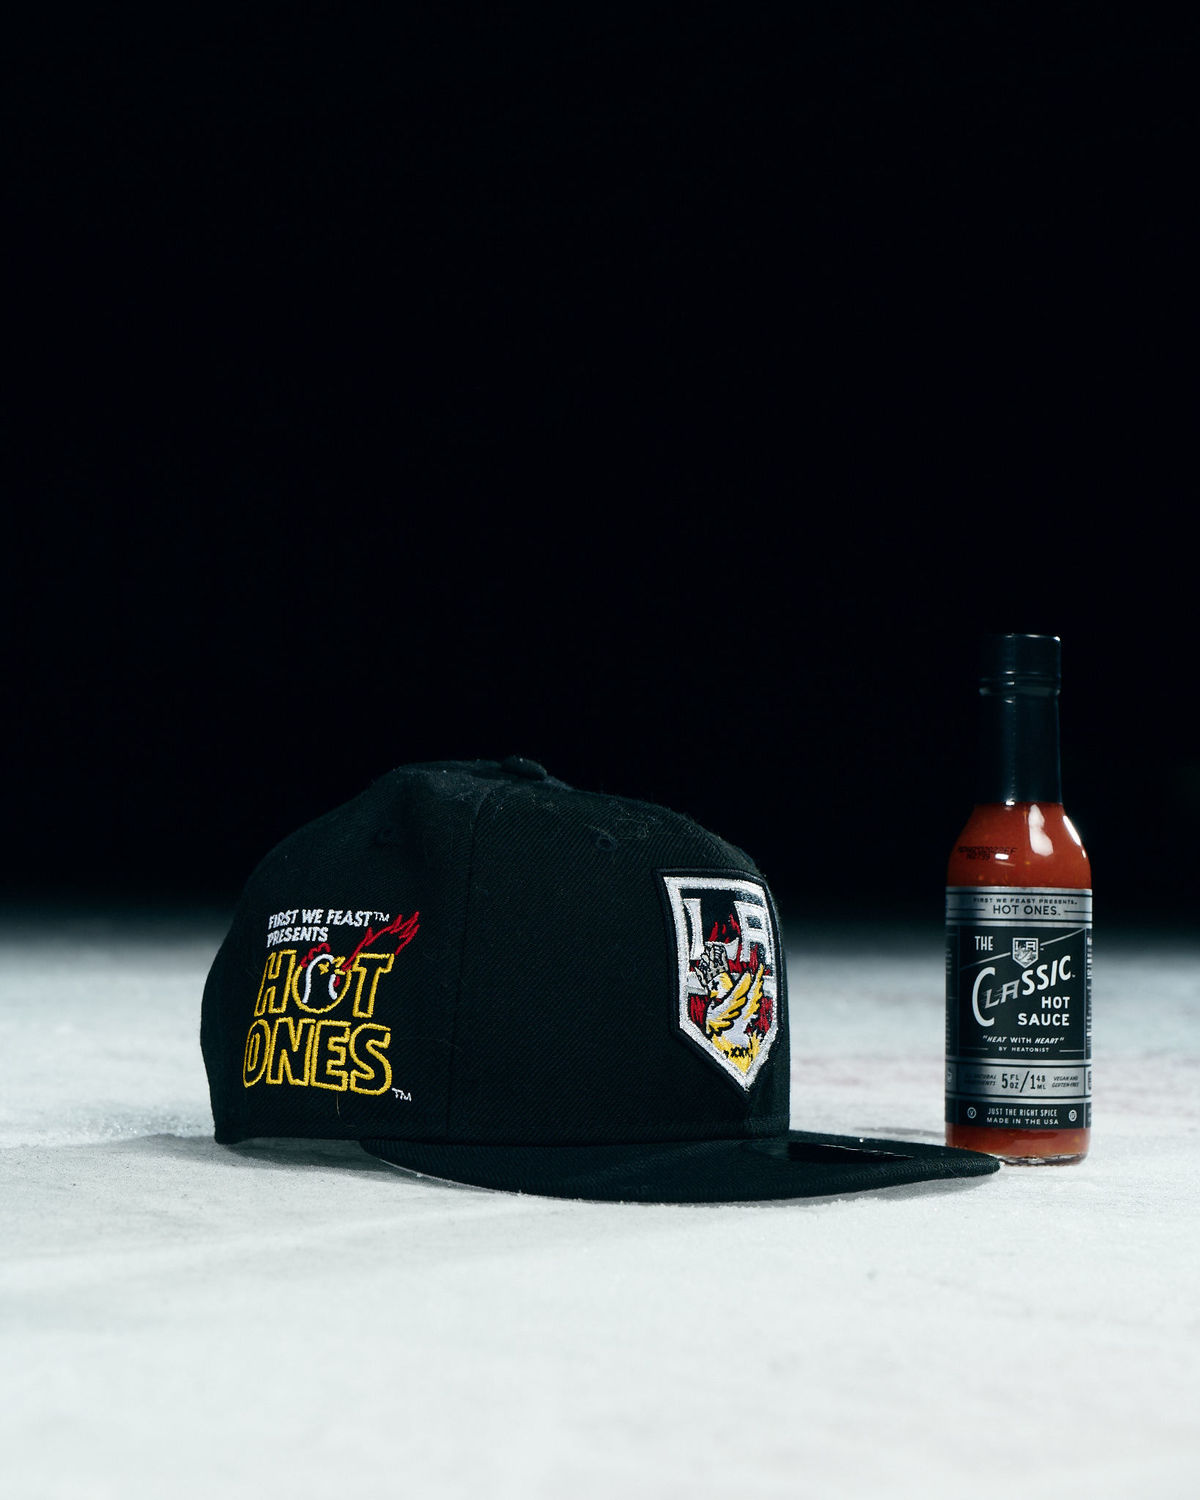 New LA Kings - Hot Ones customized hat. (photo courtesy LA Kings)